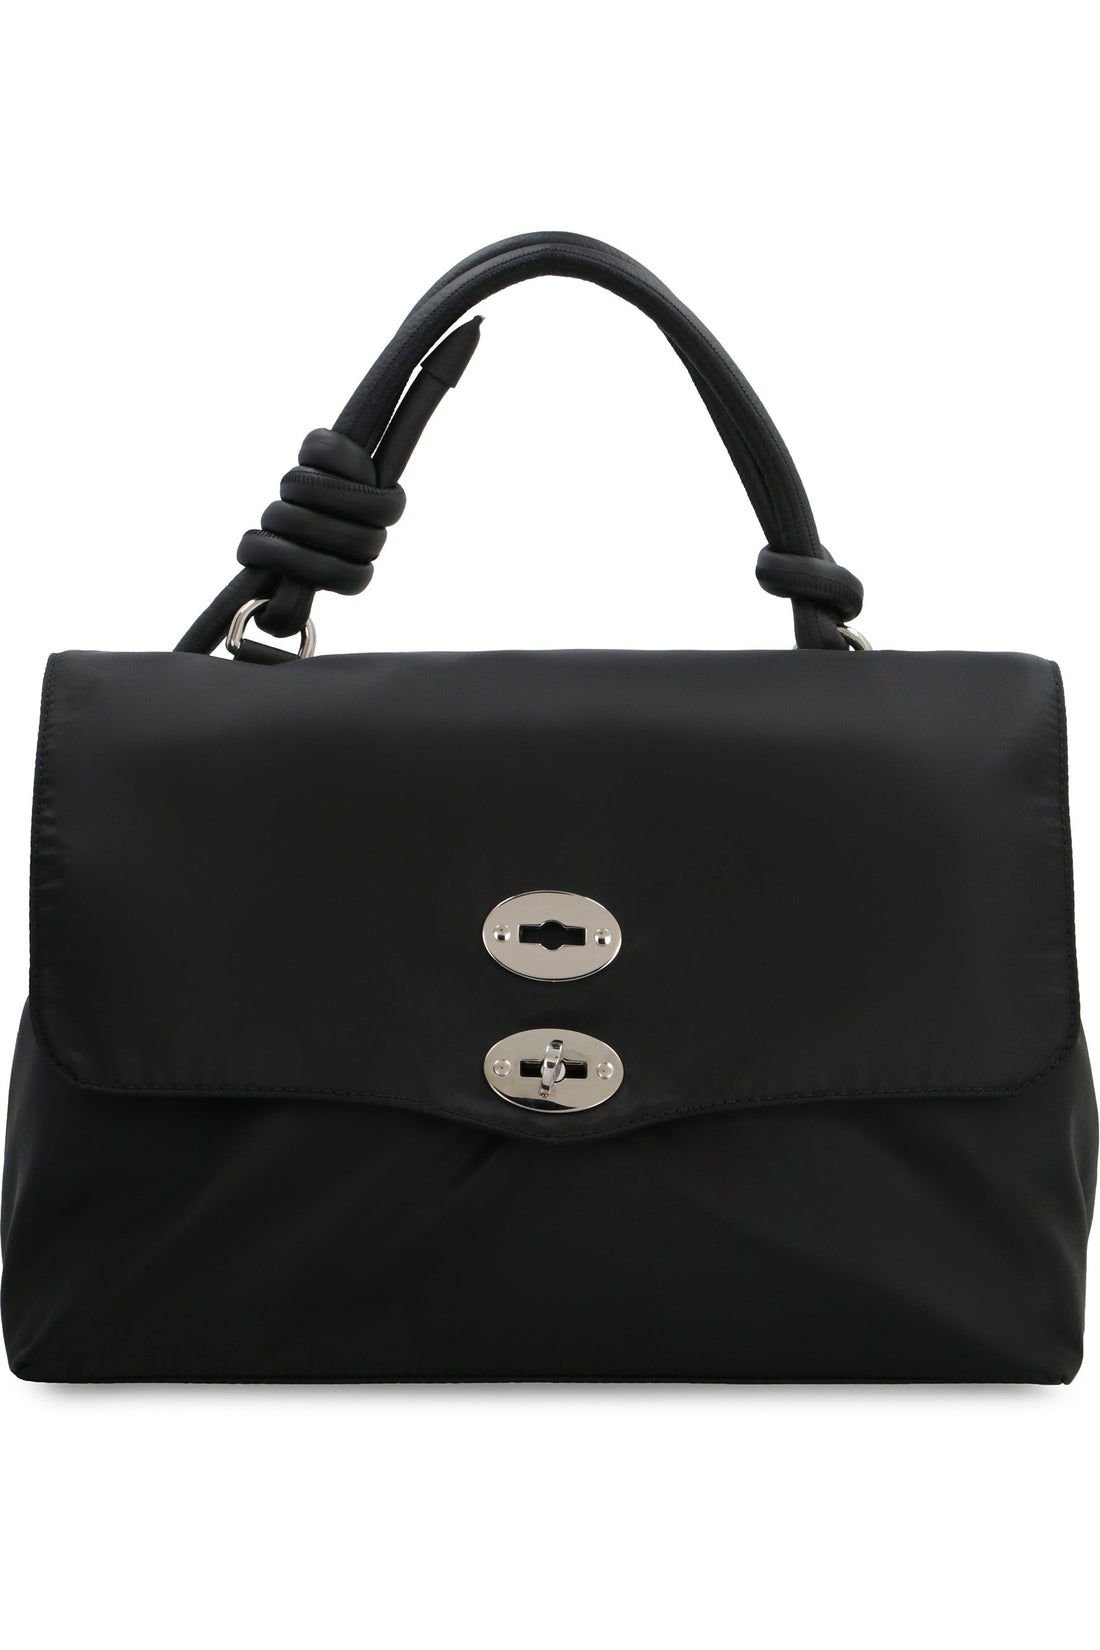 Zanellato-OUTLET-SALE-Postina M nylon handbag-ARCHIVIST